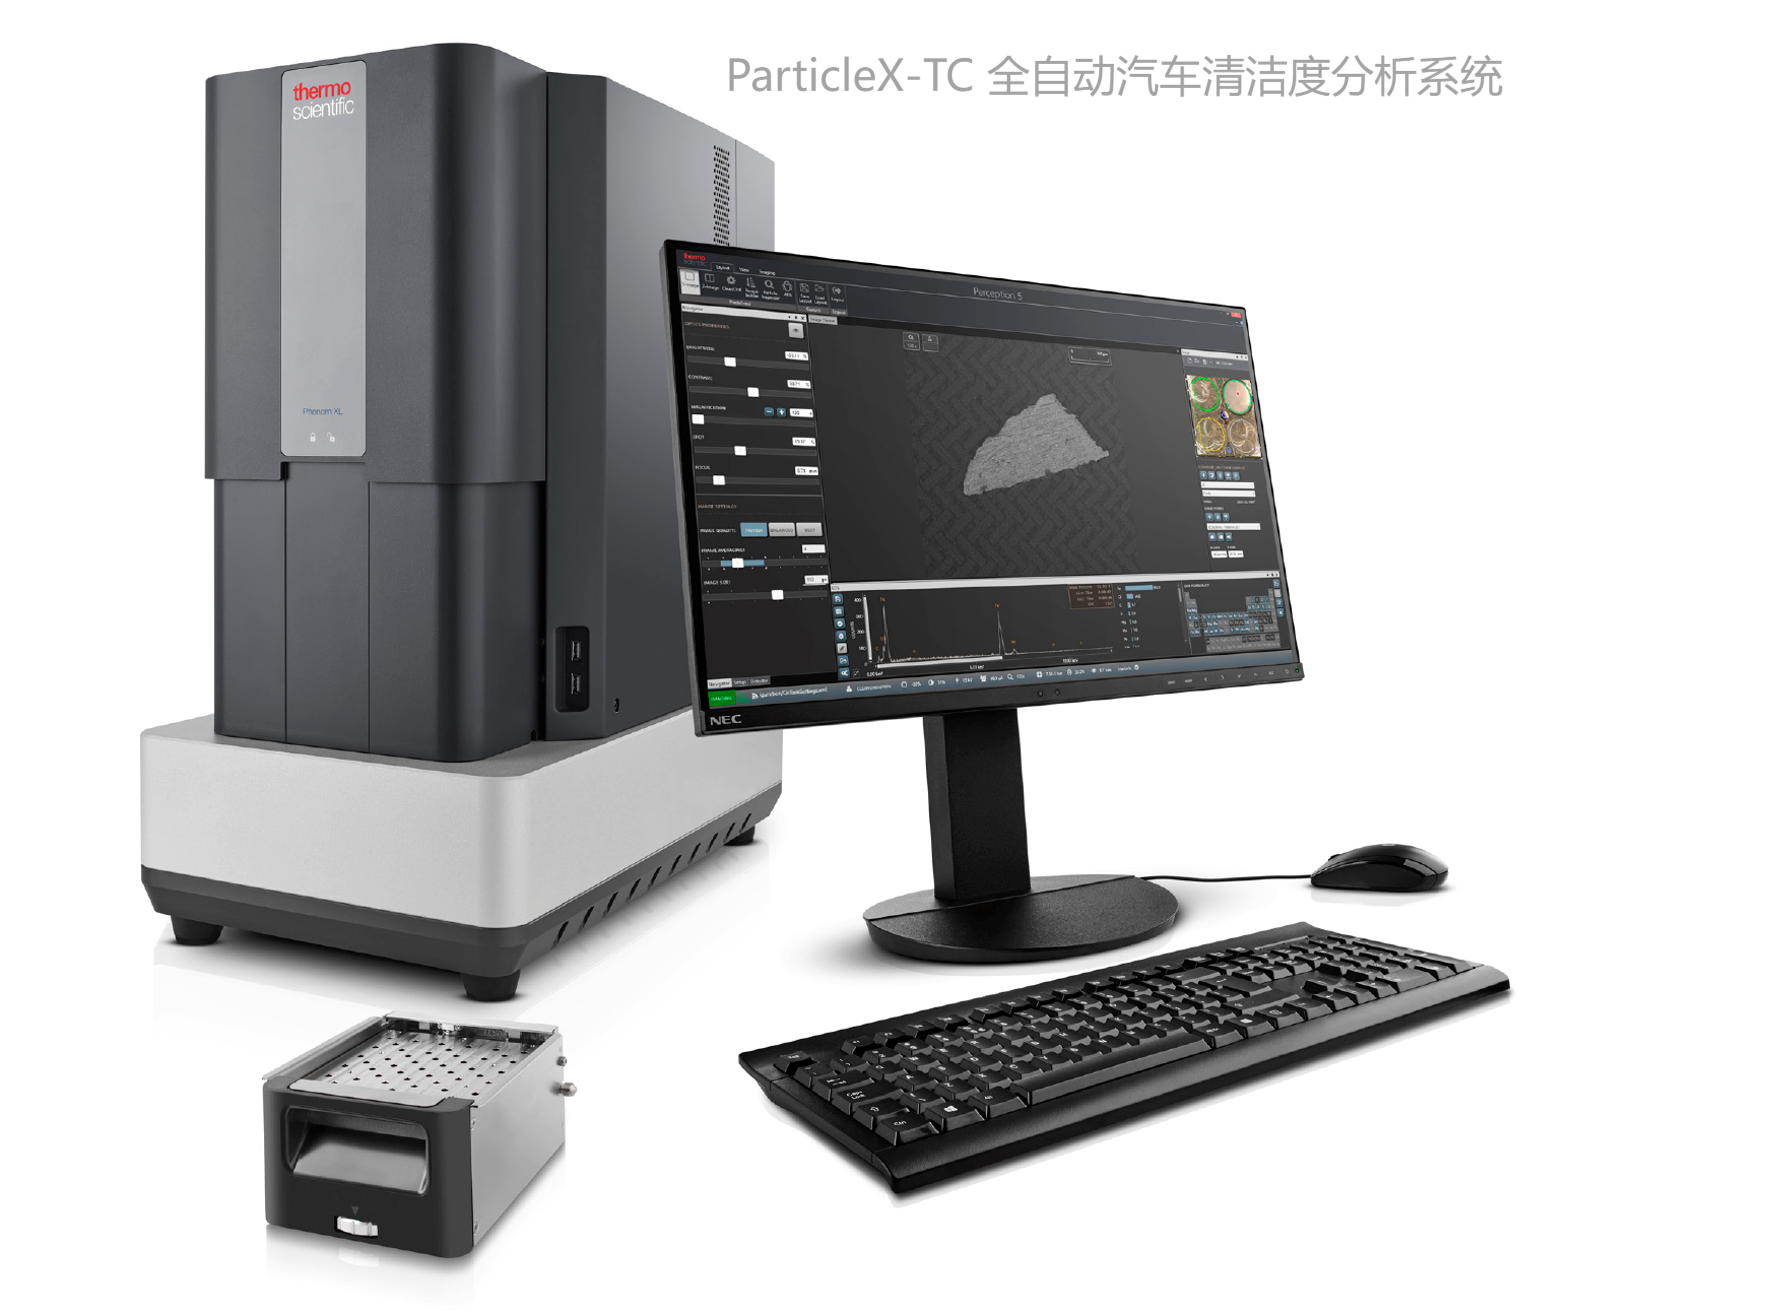 ParticleX-TC 全自动汽车清洁度分析系统--产品图片(1).png